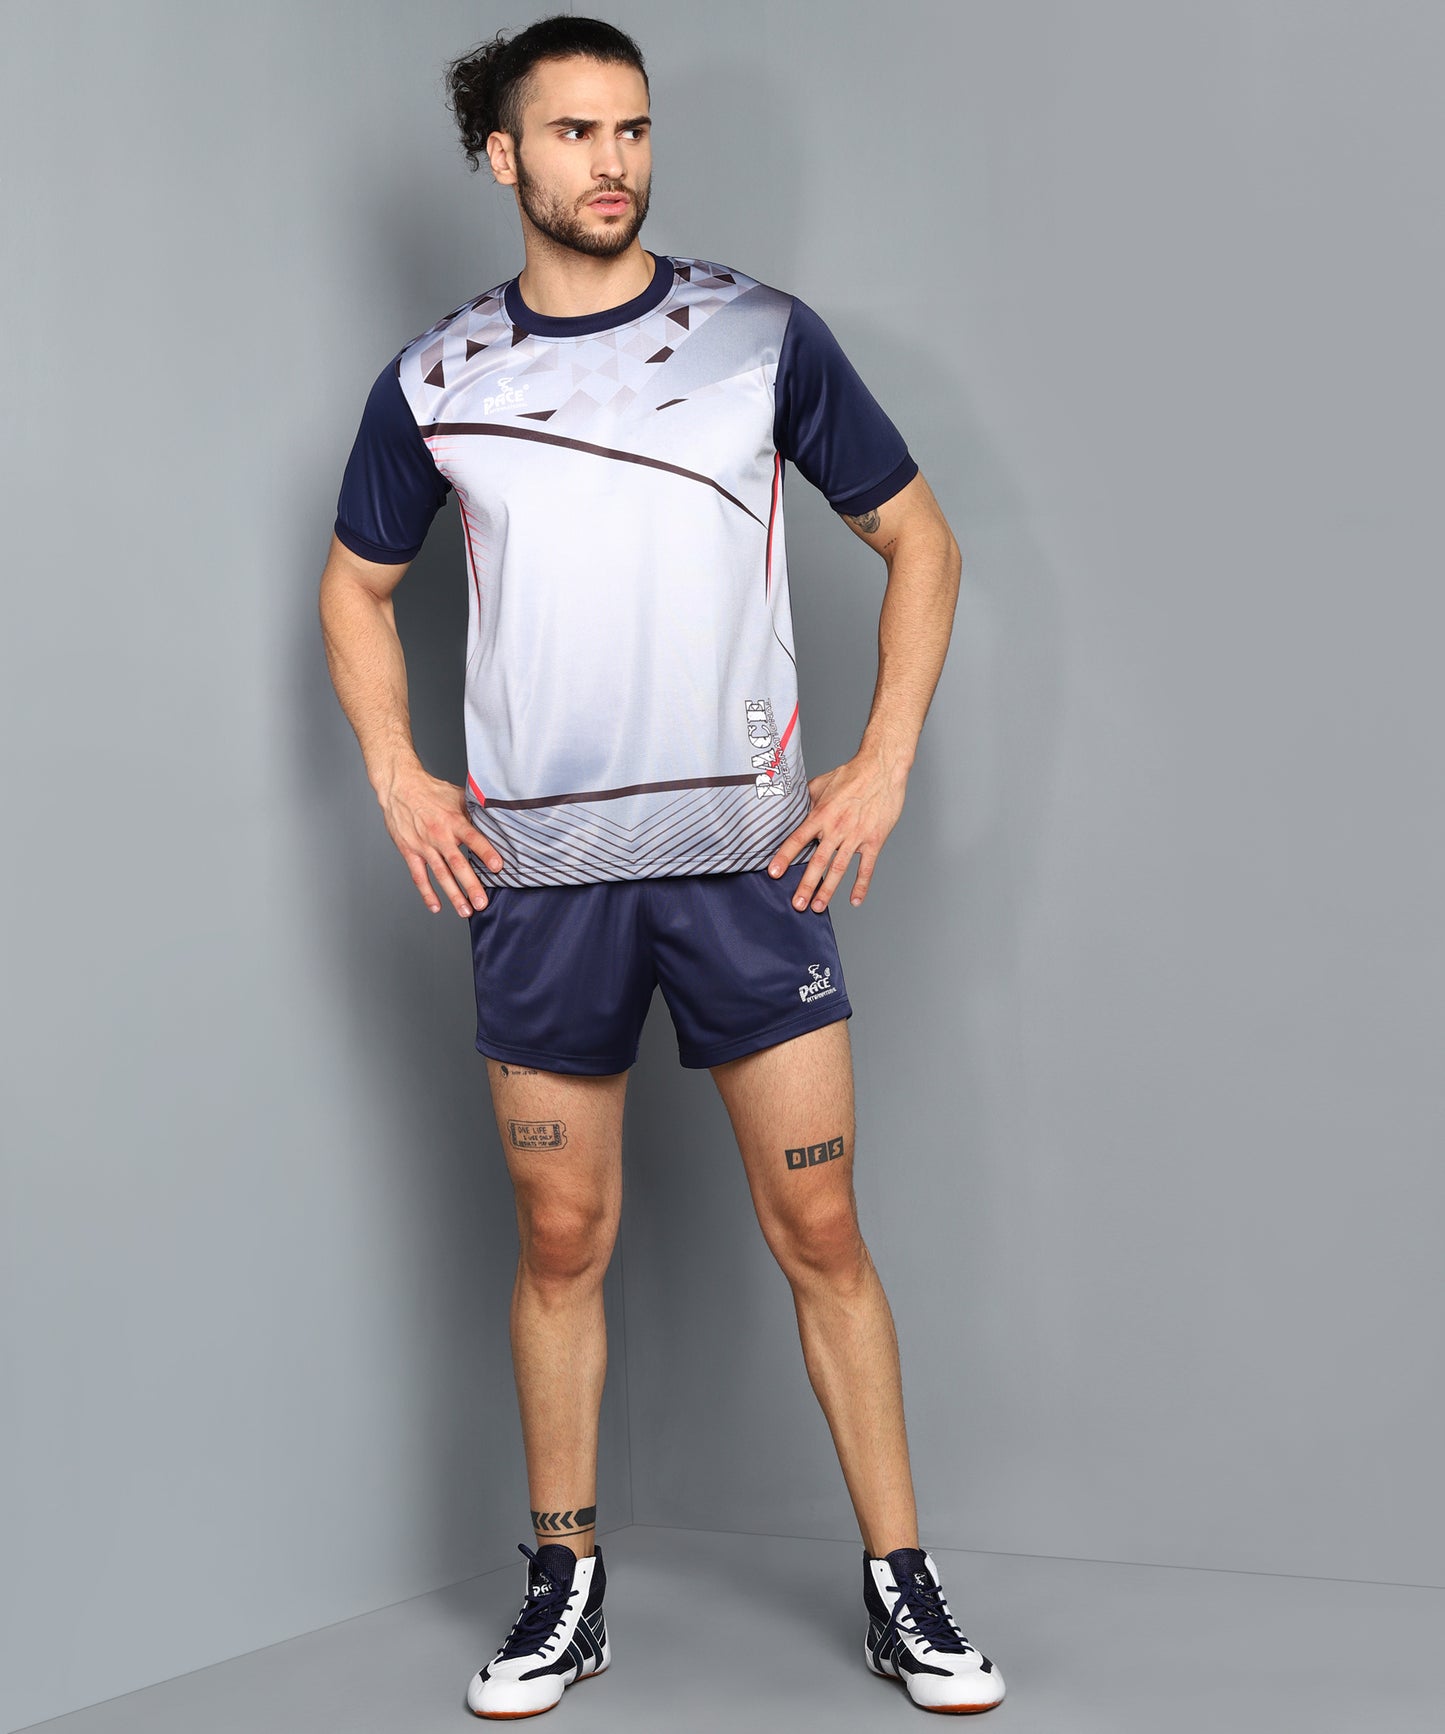 Pace International Kabaddi Jersey & Shorts for Men